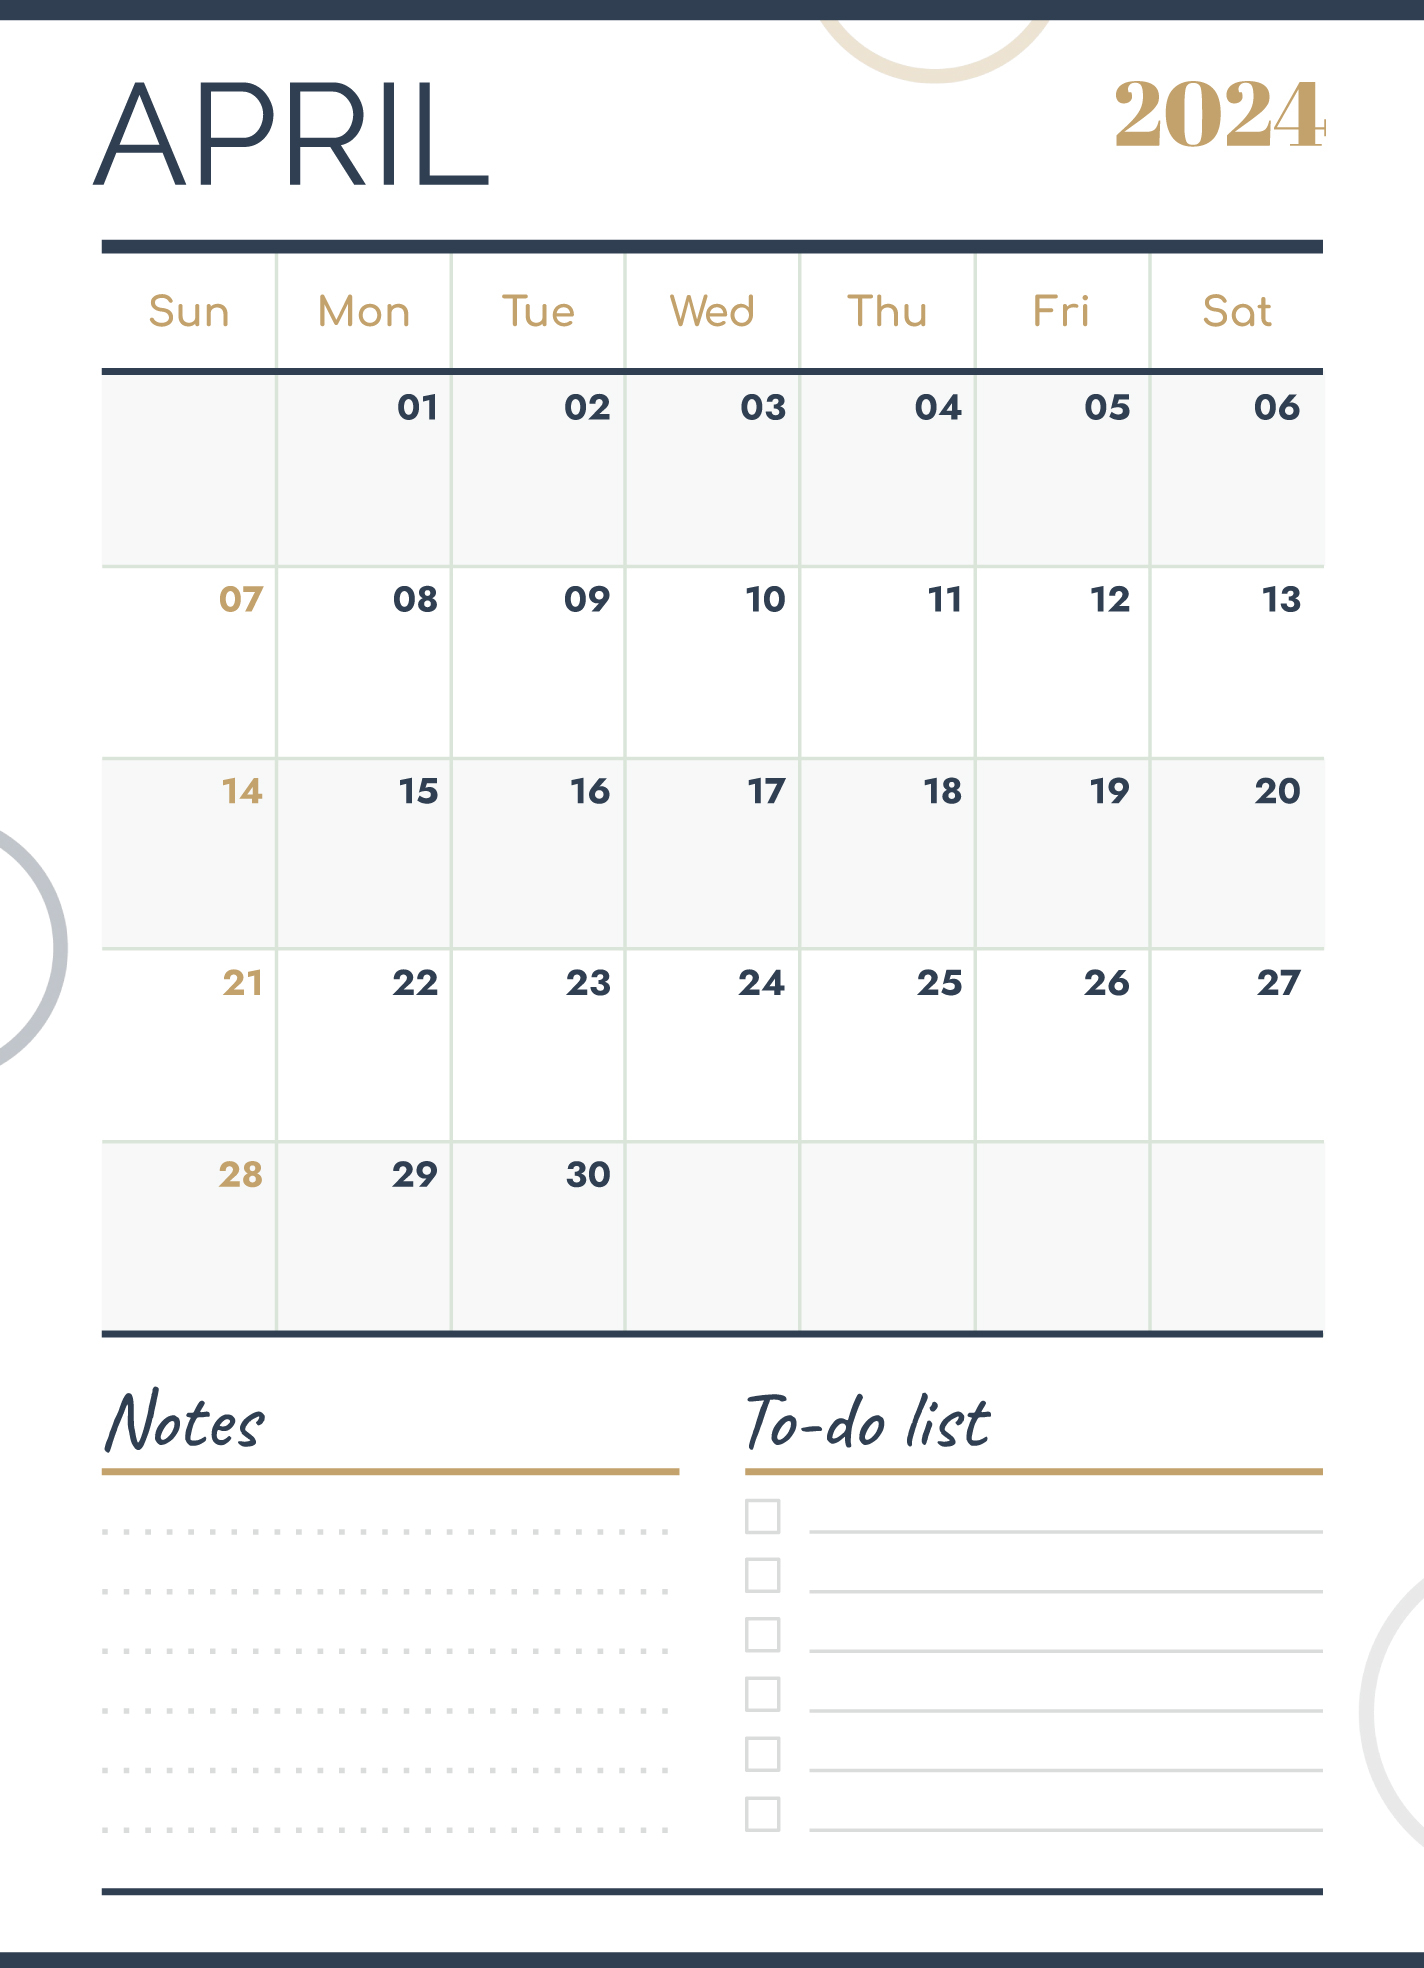 April 2024 Calendar Free Google Docs Template - Gdoc.io pertaining to Google Calendar - April 2024